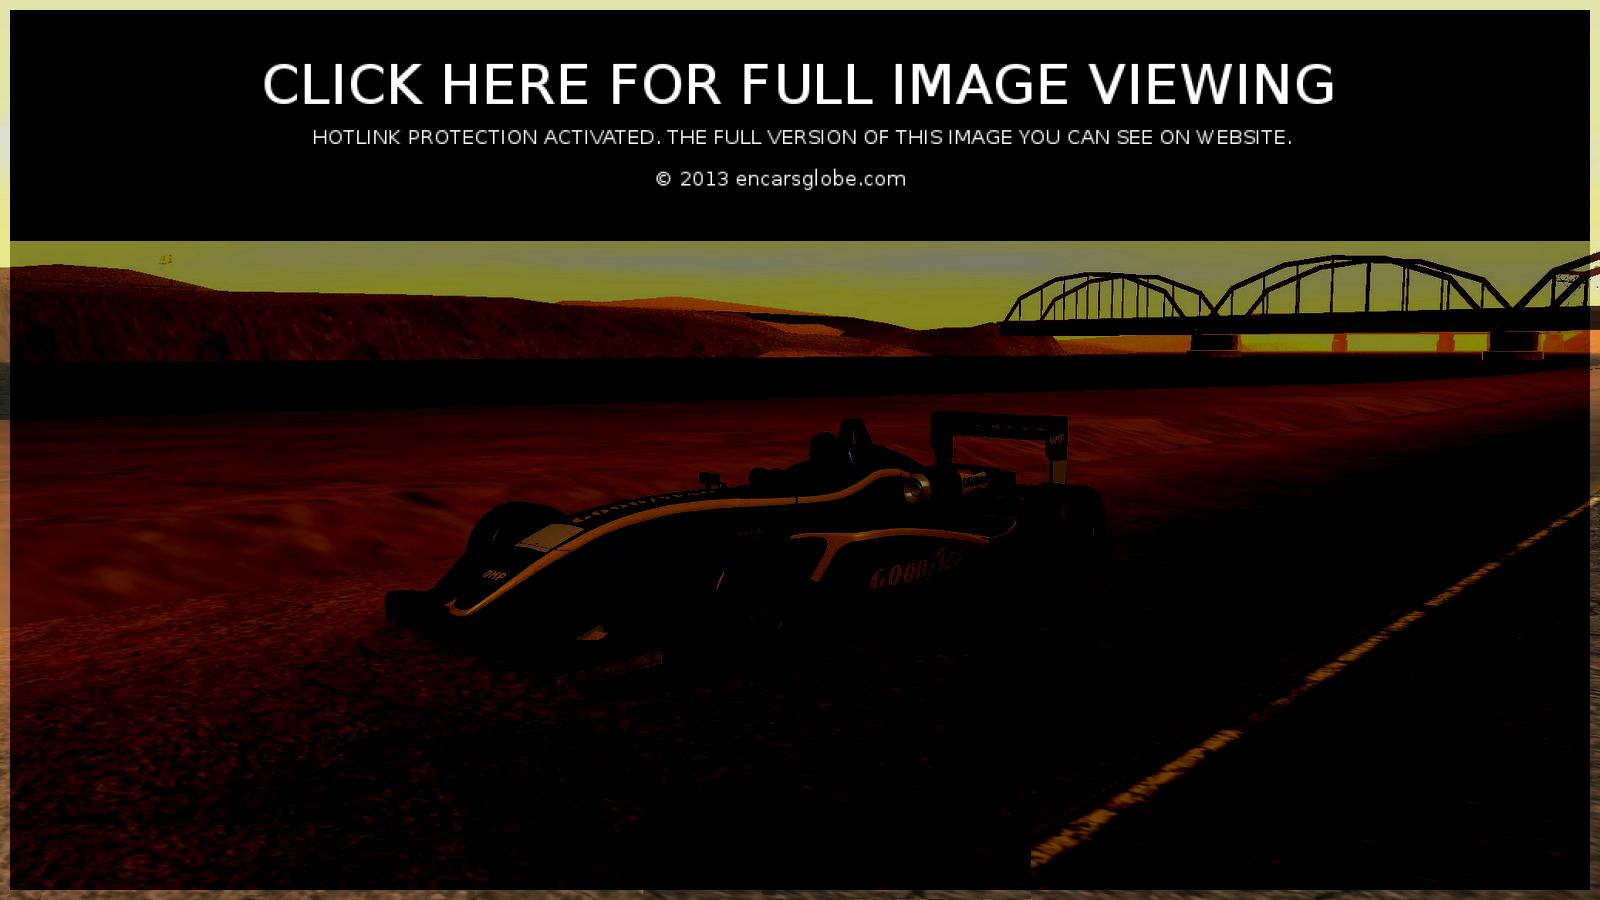 Dallara Formula Nissan Photo Gallery: Photo #02 out of 11, Image ...